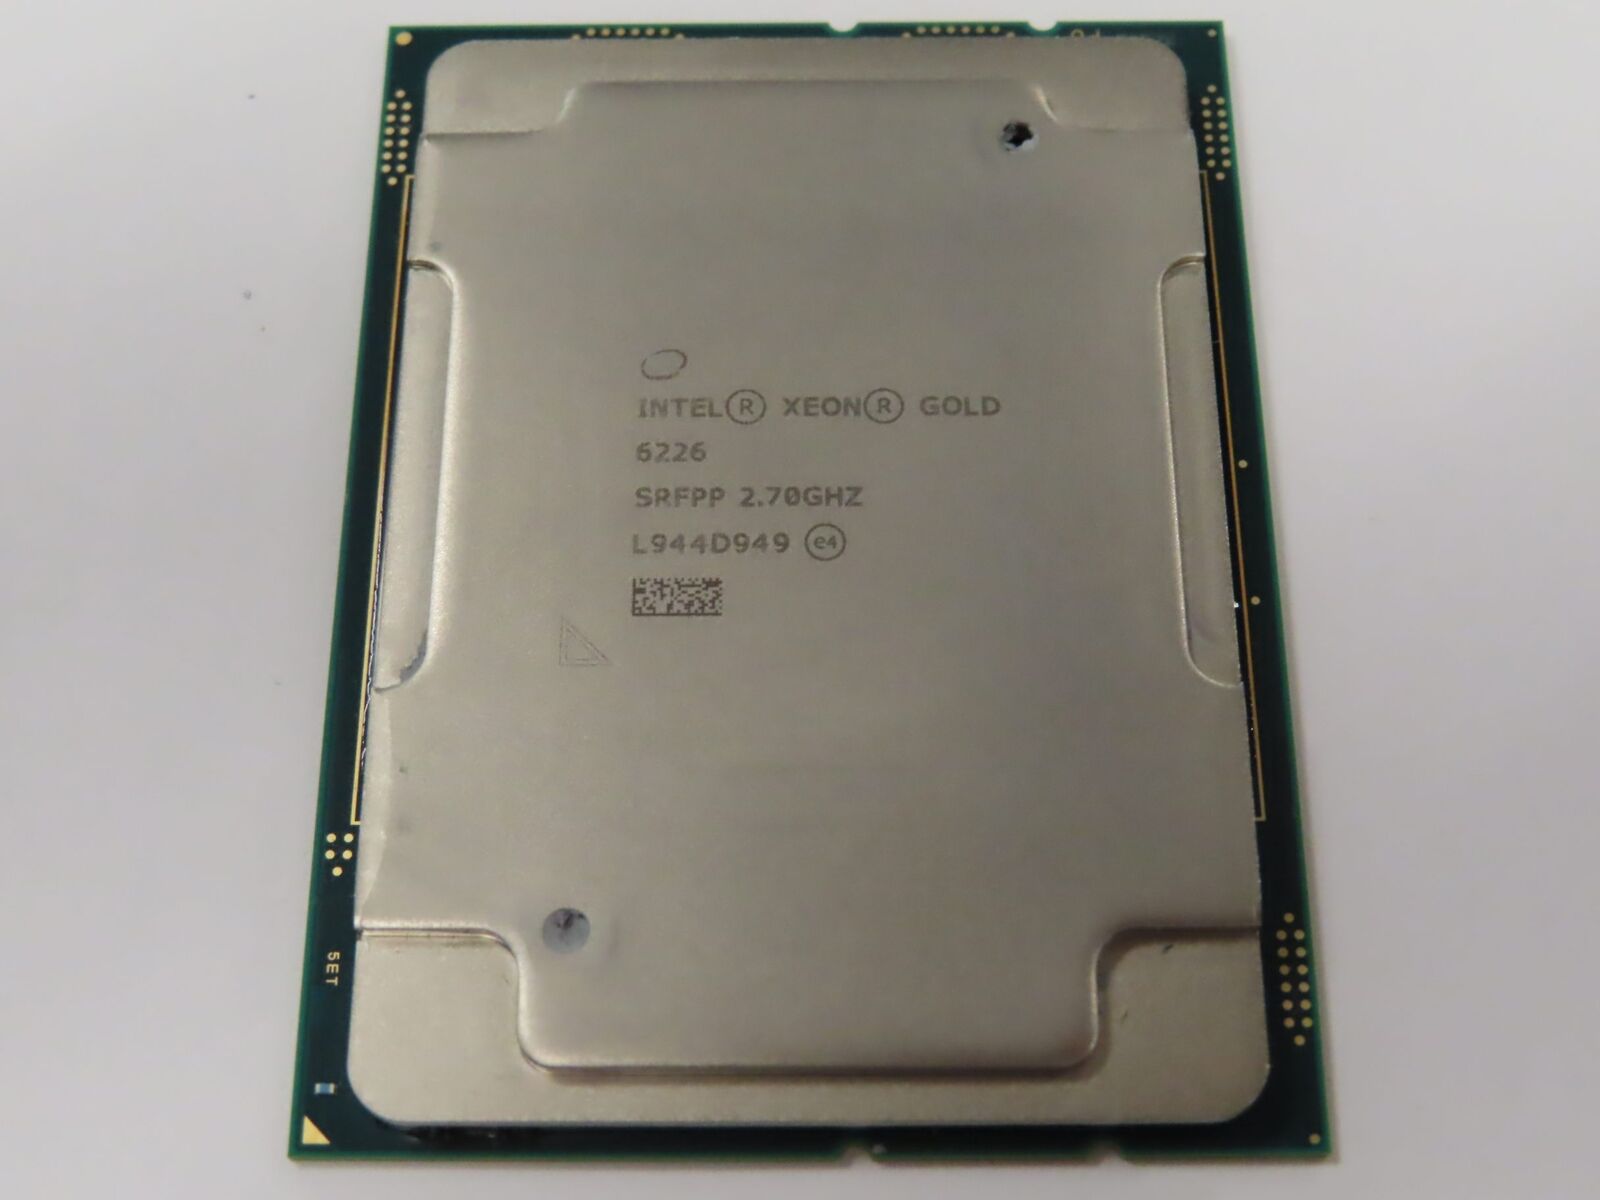 Intel Xeon Gold 6226 2.7GHz 19.25MB 12-Core LGA 3647 CPU / Processor ___ SRFPP